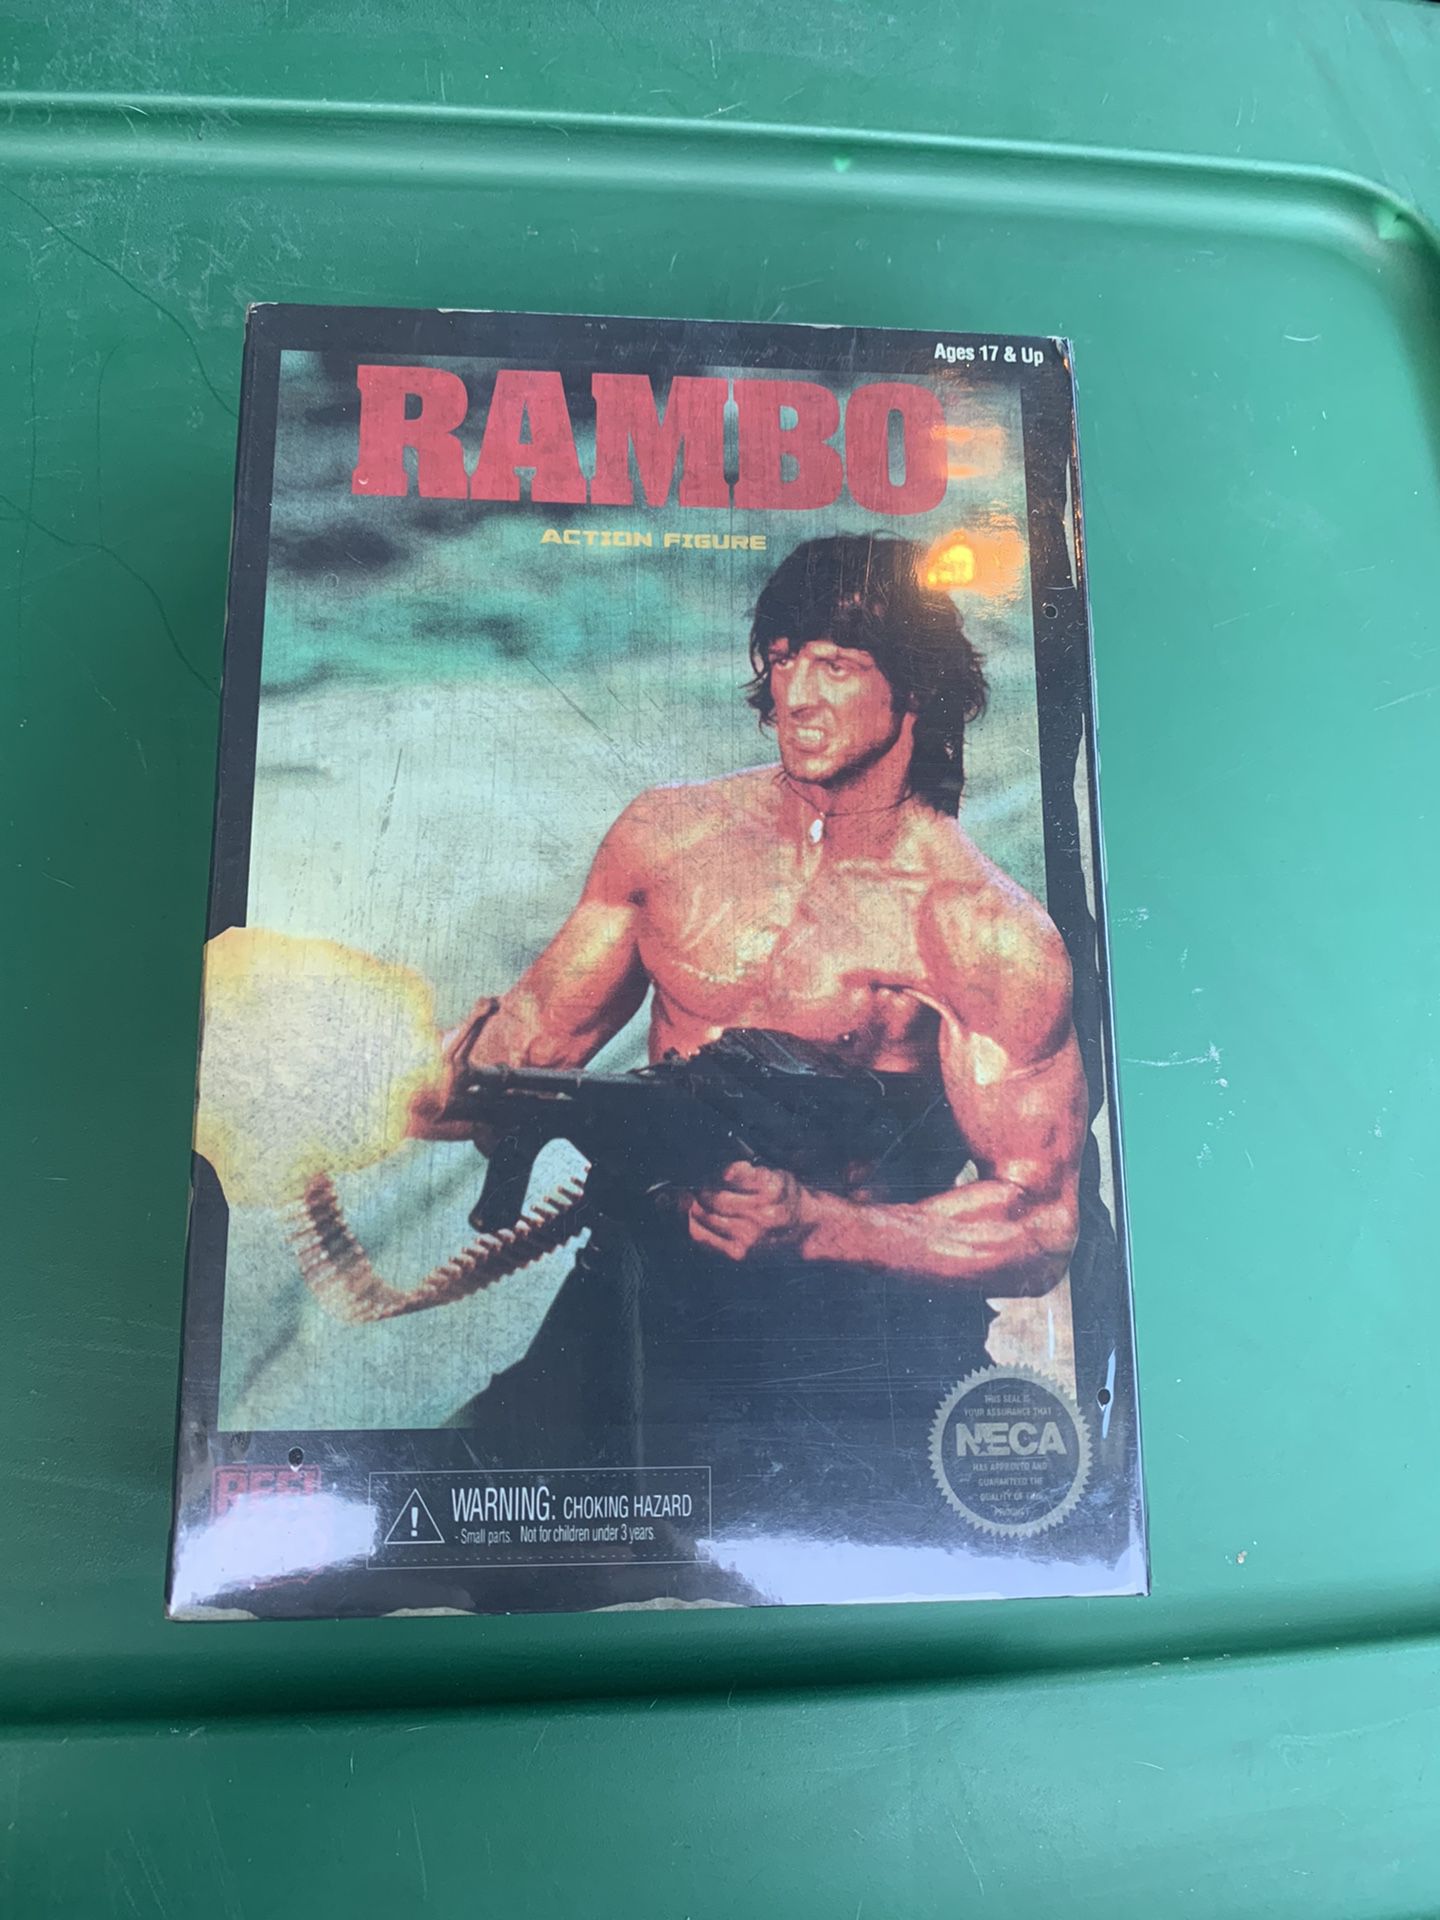 Neca Rambo Action figure